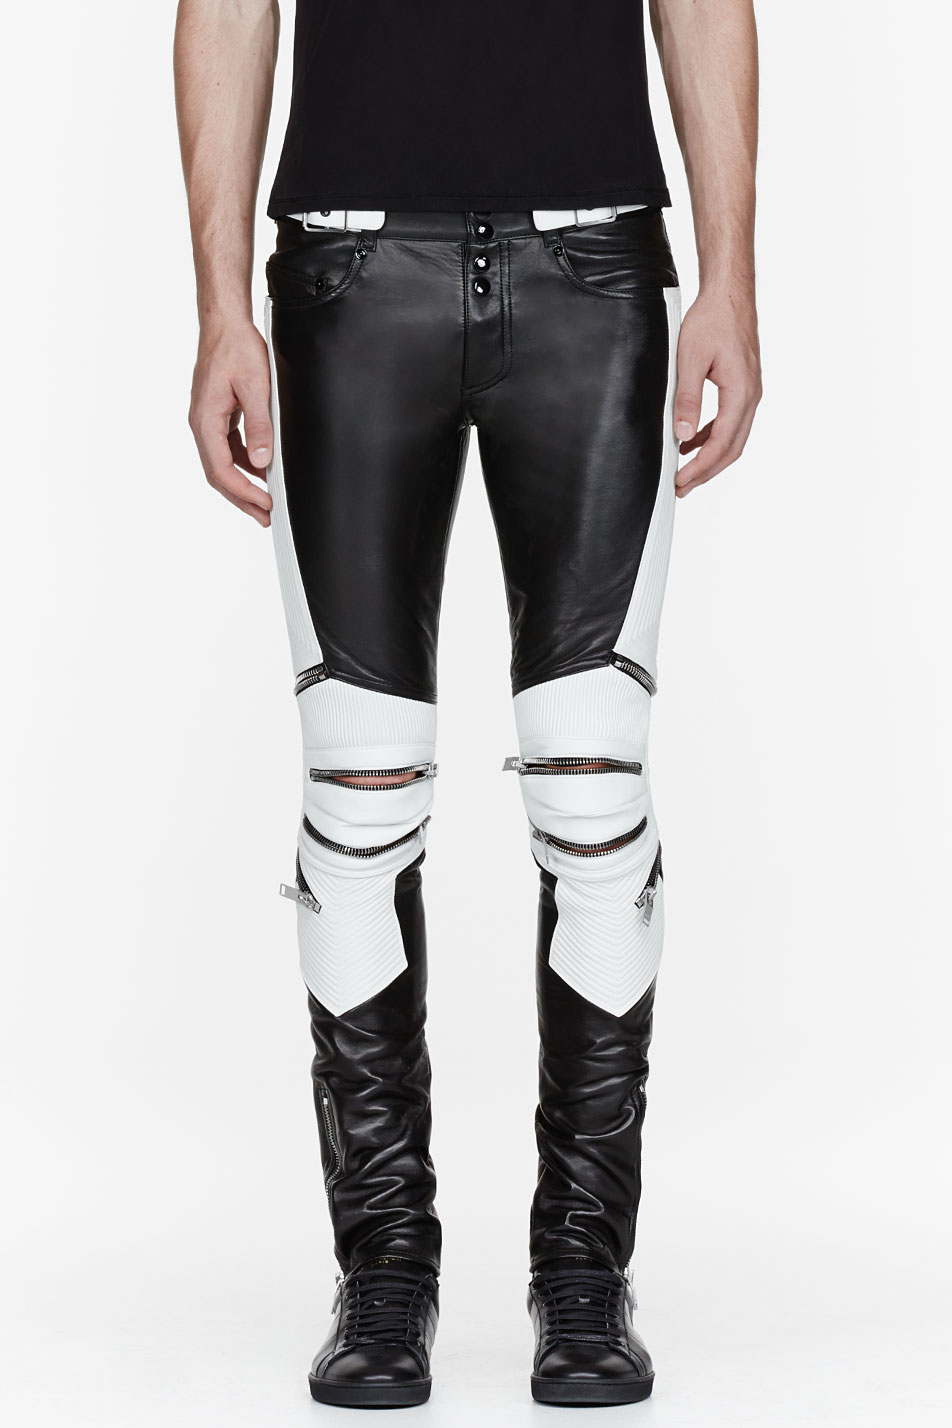 Lyst - Saint Laurent Black and White Ribbed Zipped Biker Pants in Black ...